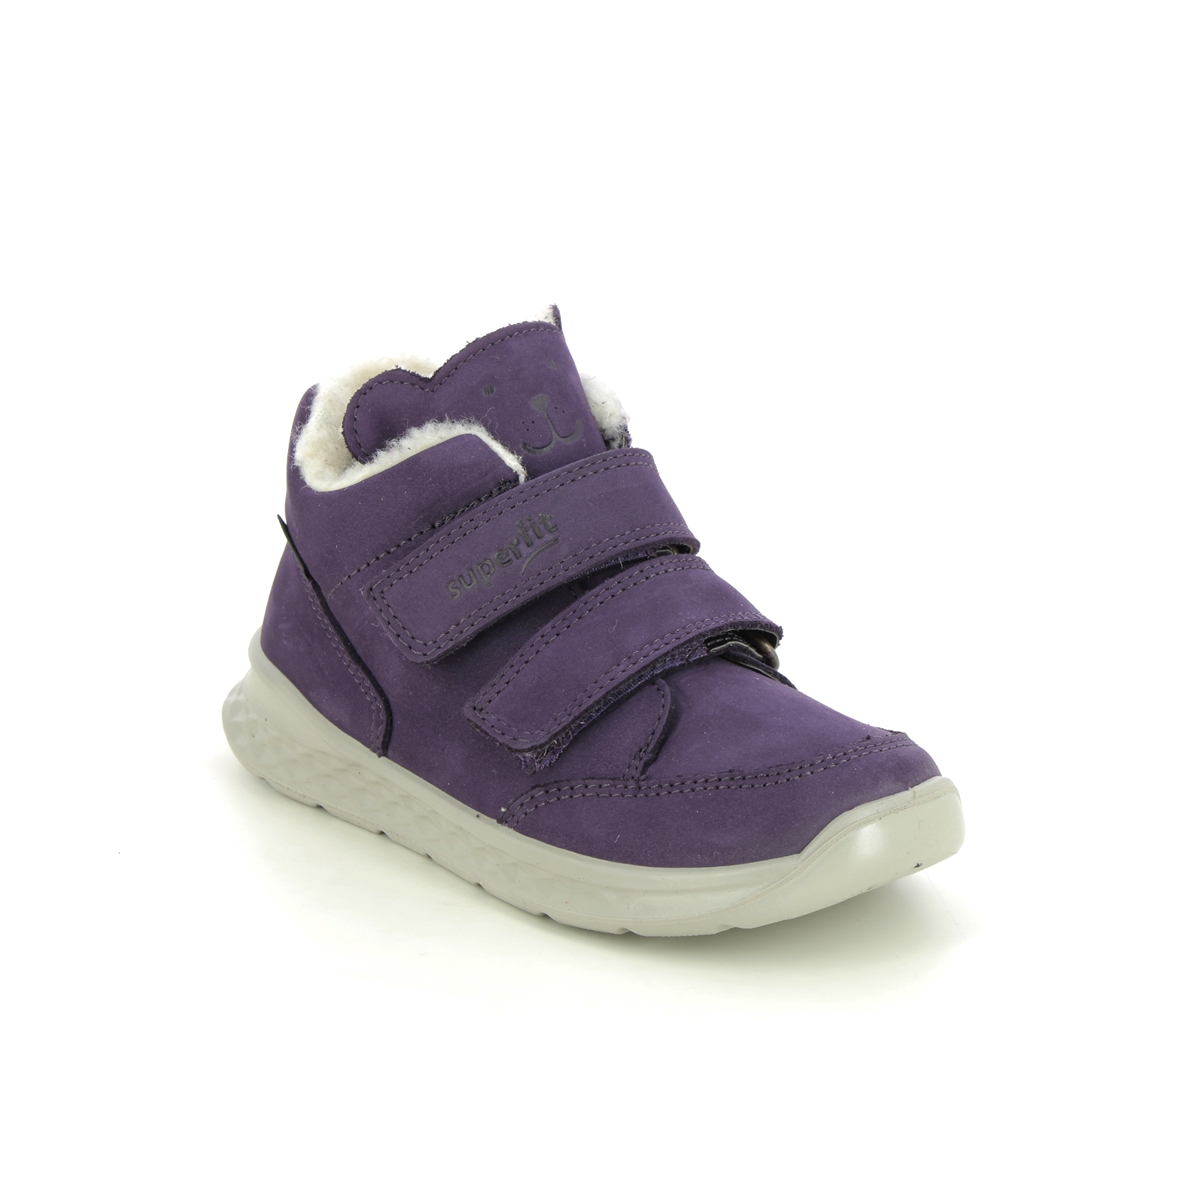 Superfit Breeze 2V Gtx Purple Nubuck Kids Toddler Girls Boots 1000372-8500 In Size 22 In Plain Purple Nubuck